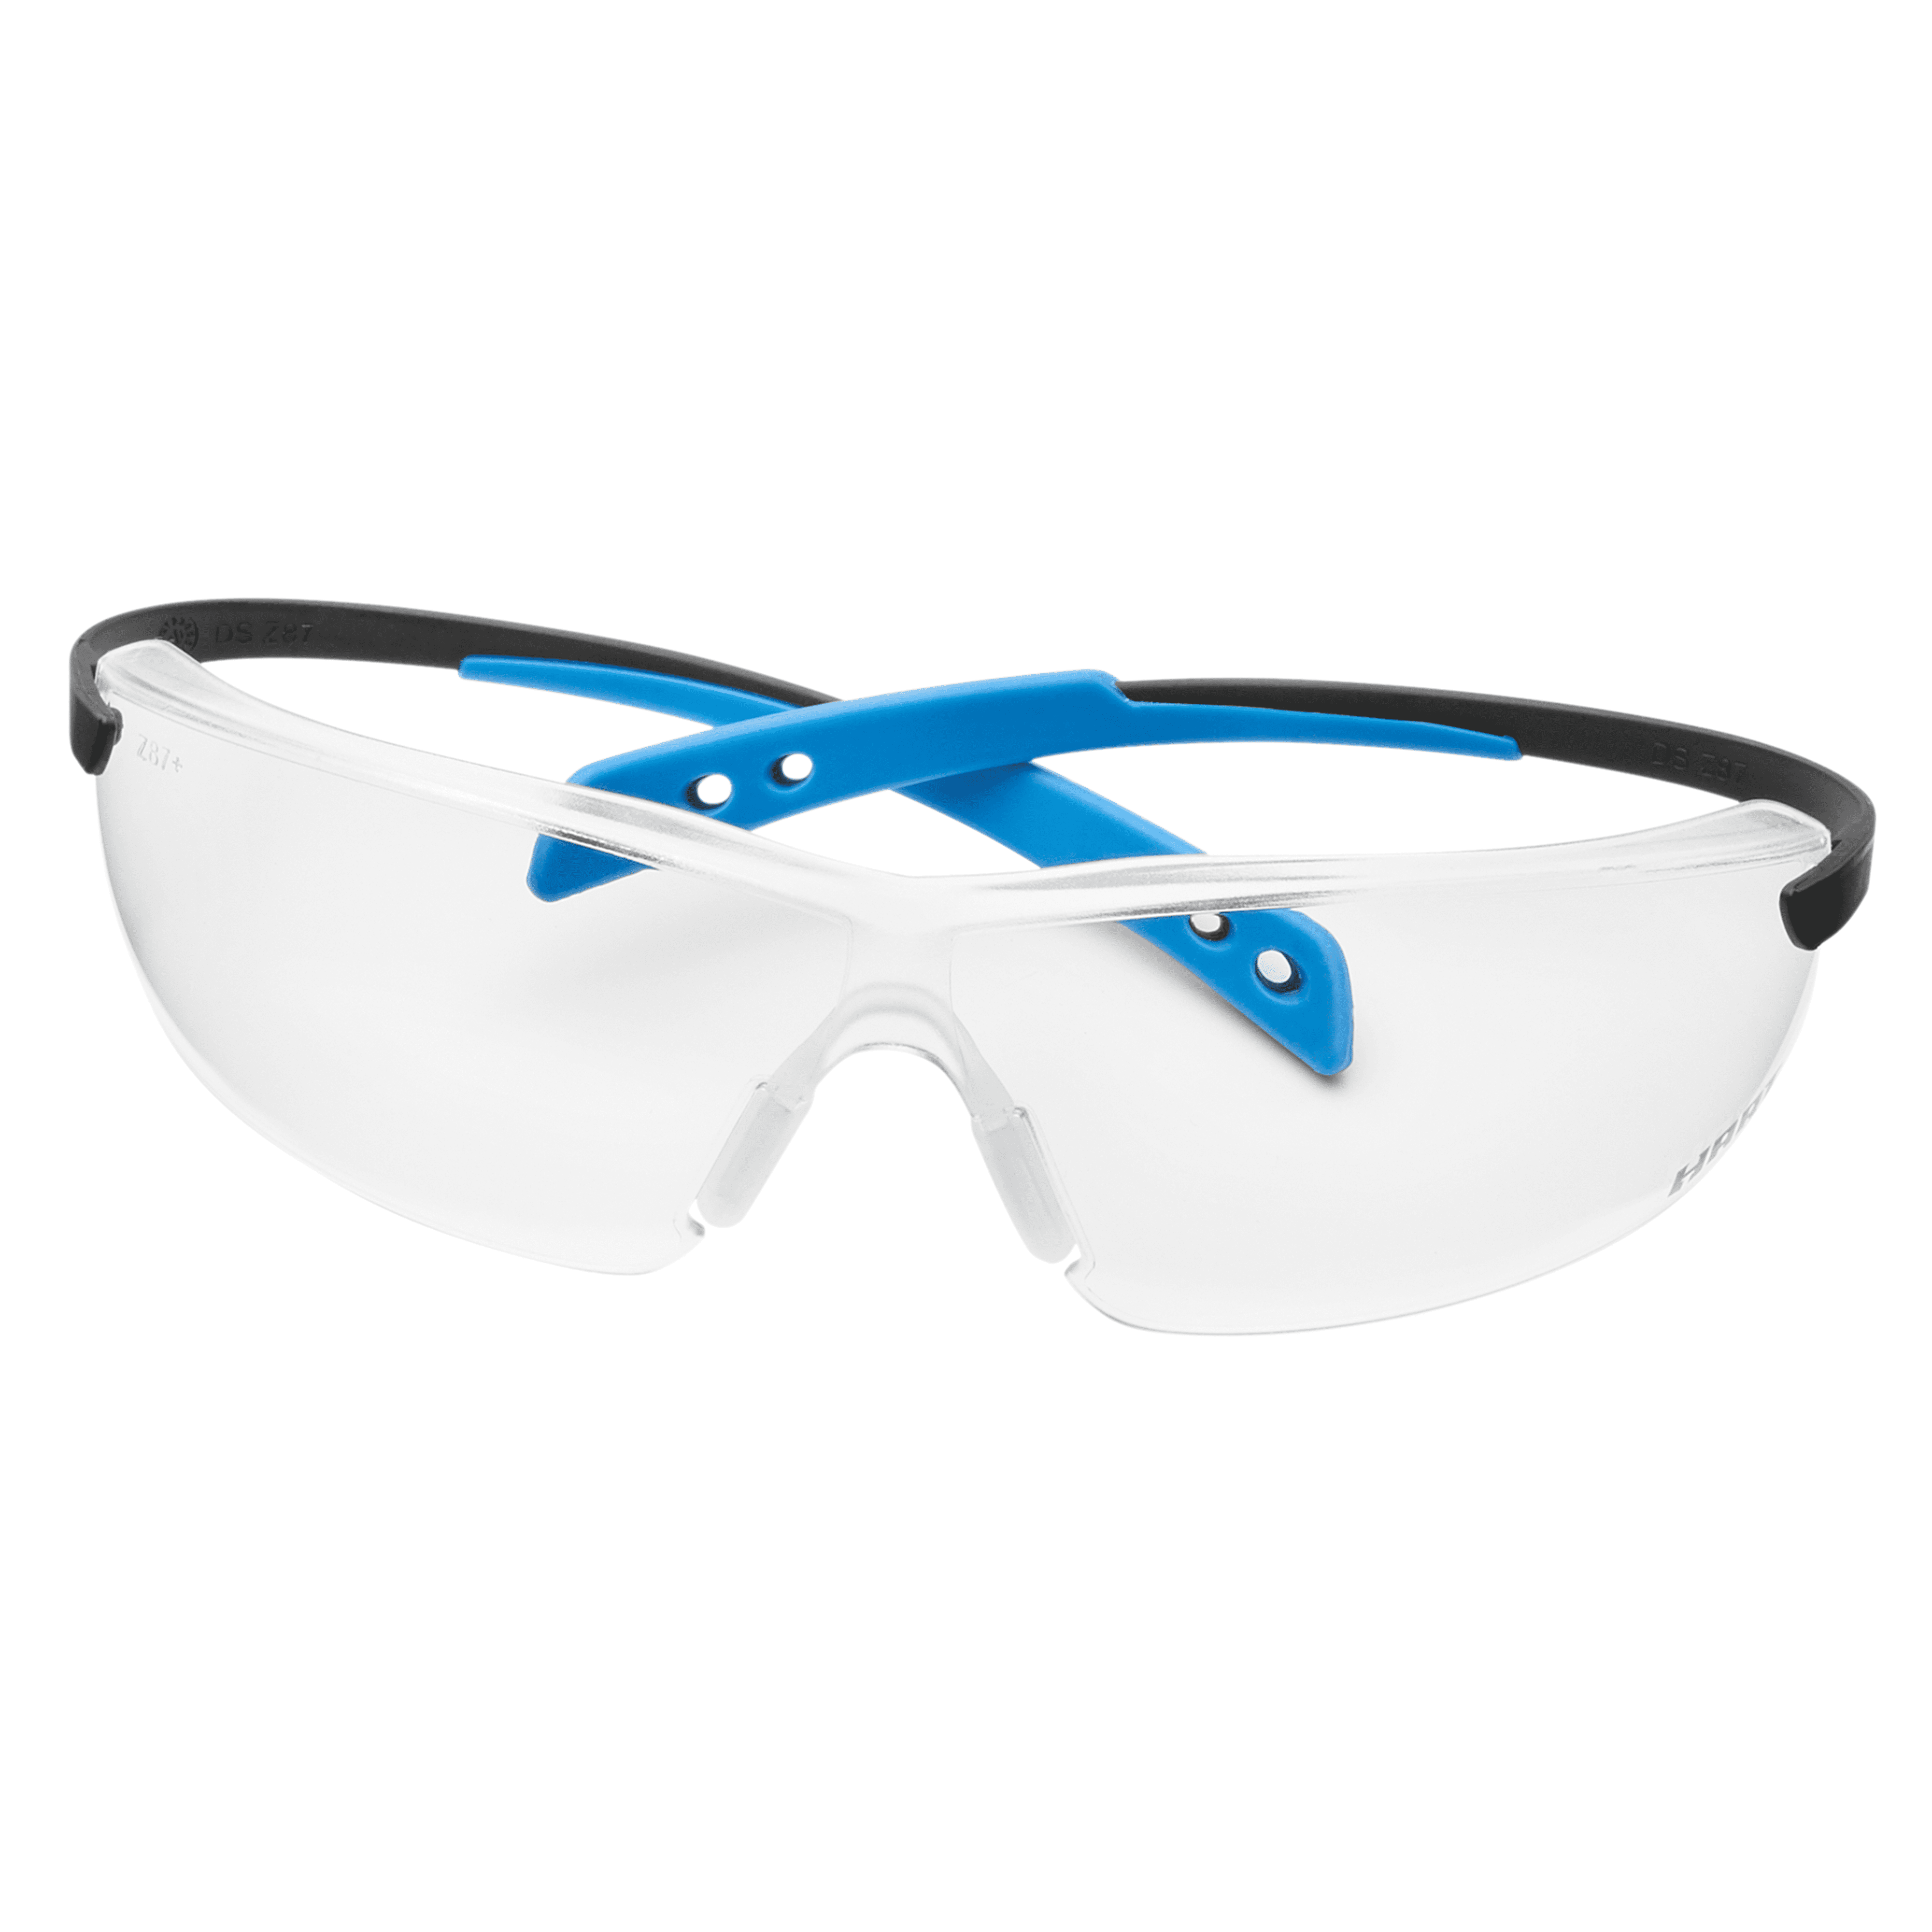 Glasses Goggles Anti Fog Dust Splash-proof Portable Glasses Home Protective P6X3 